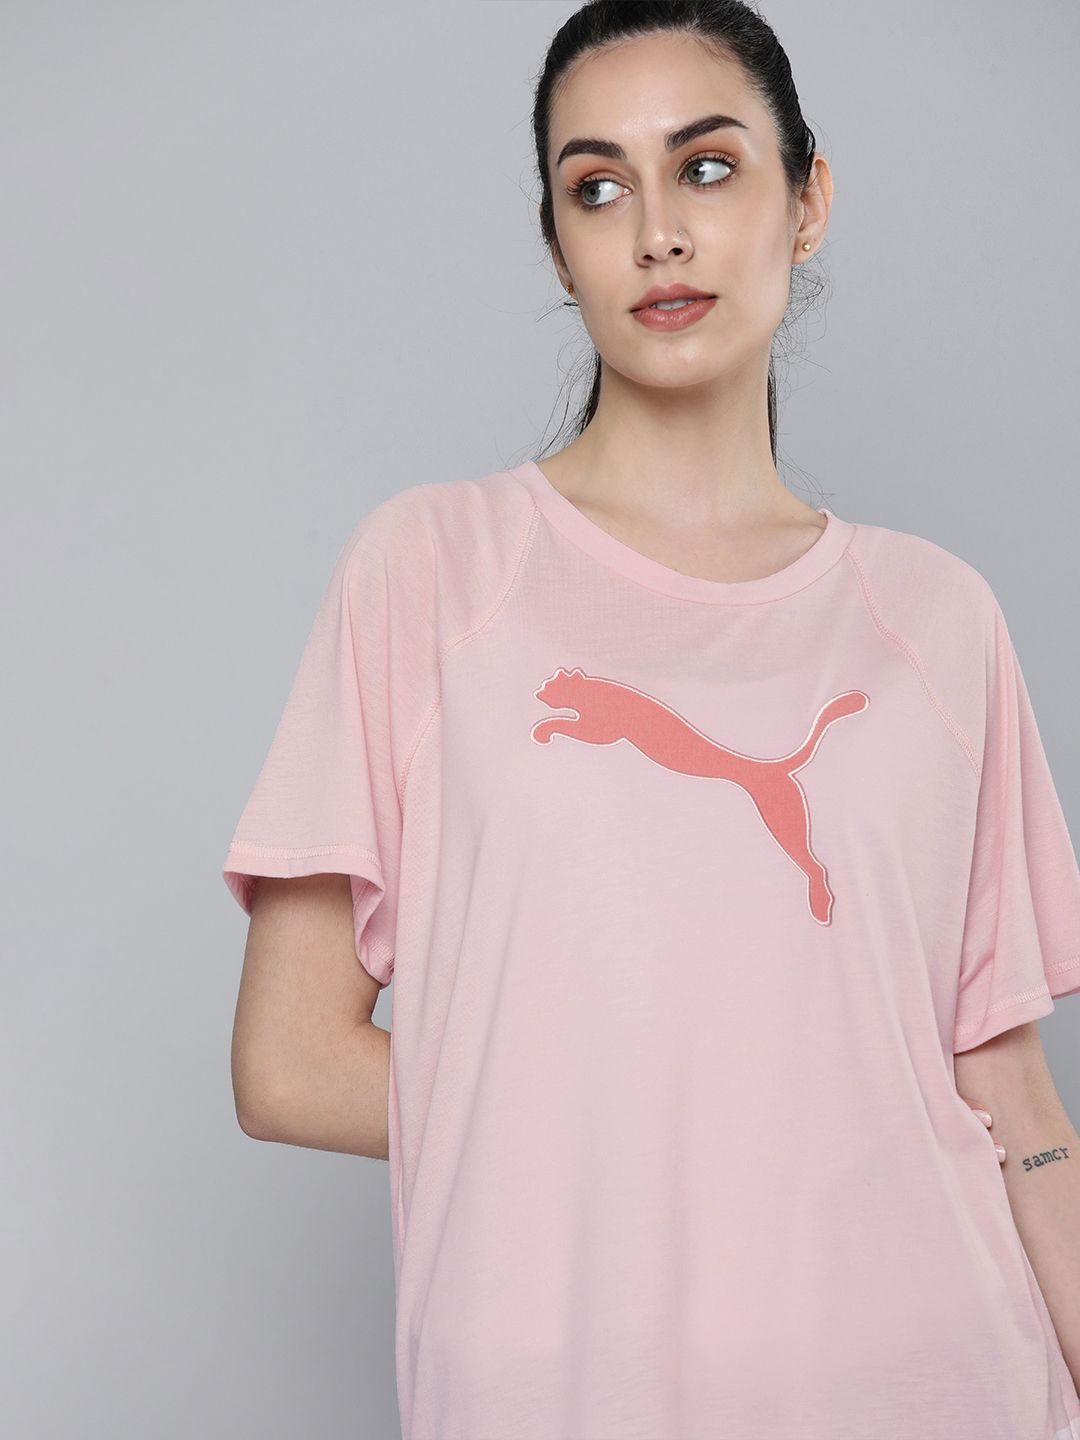 Puma Women Pink & Orange Brand Logo Printed Evostripe Summer T-shirt Price in India